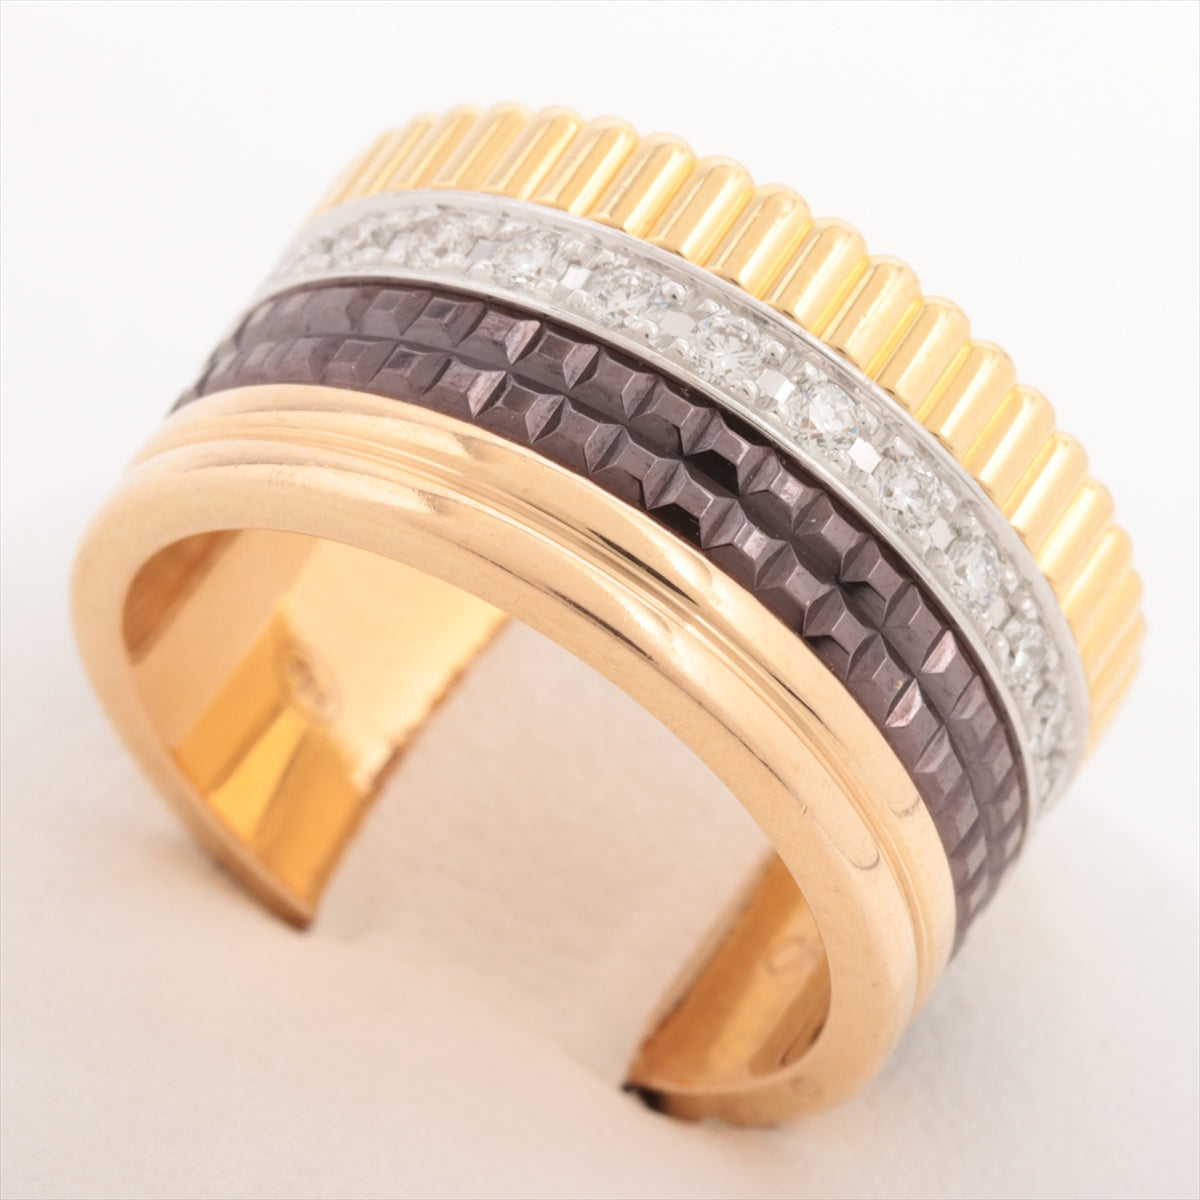 Boucheron Quatre Large diamond rings 750(YG×PG×WG) 14.1g 53